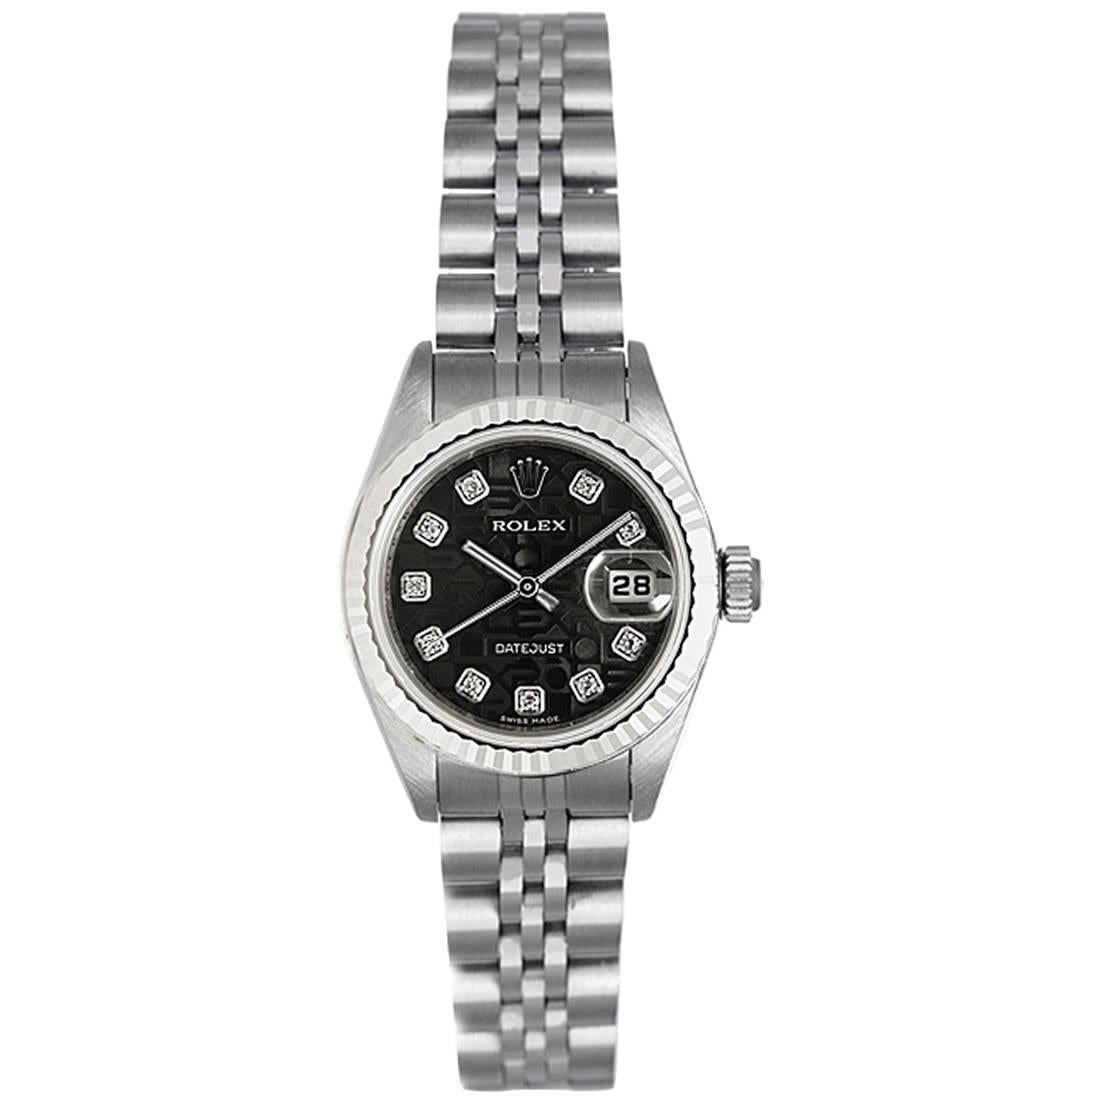 Rolex Ladies White Gold Stainless Steel Diamond Datejust Automatic Wristwatch